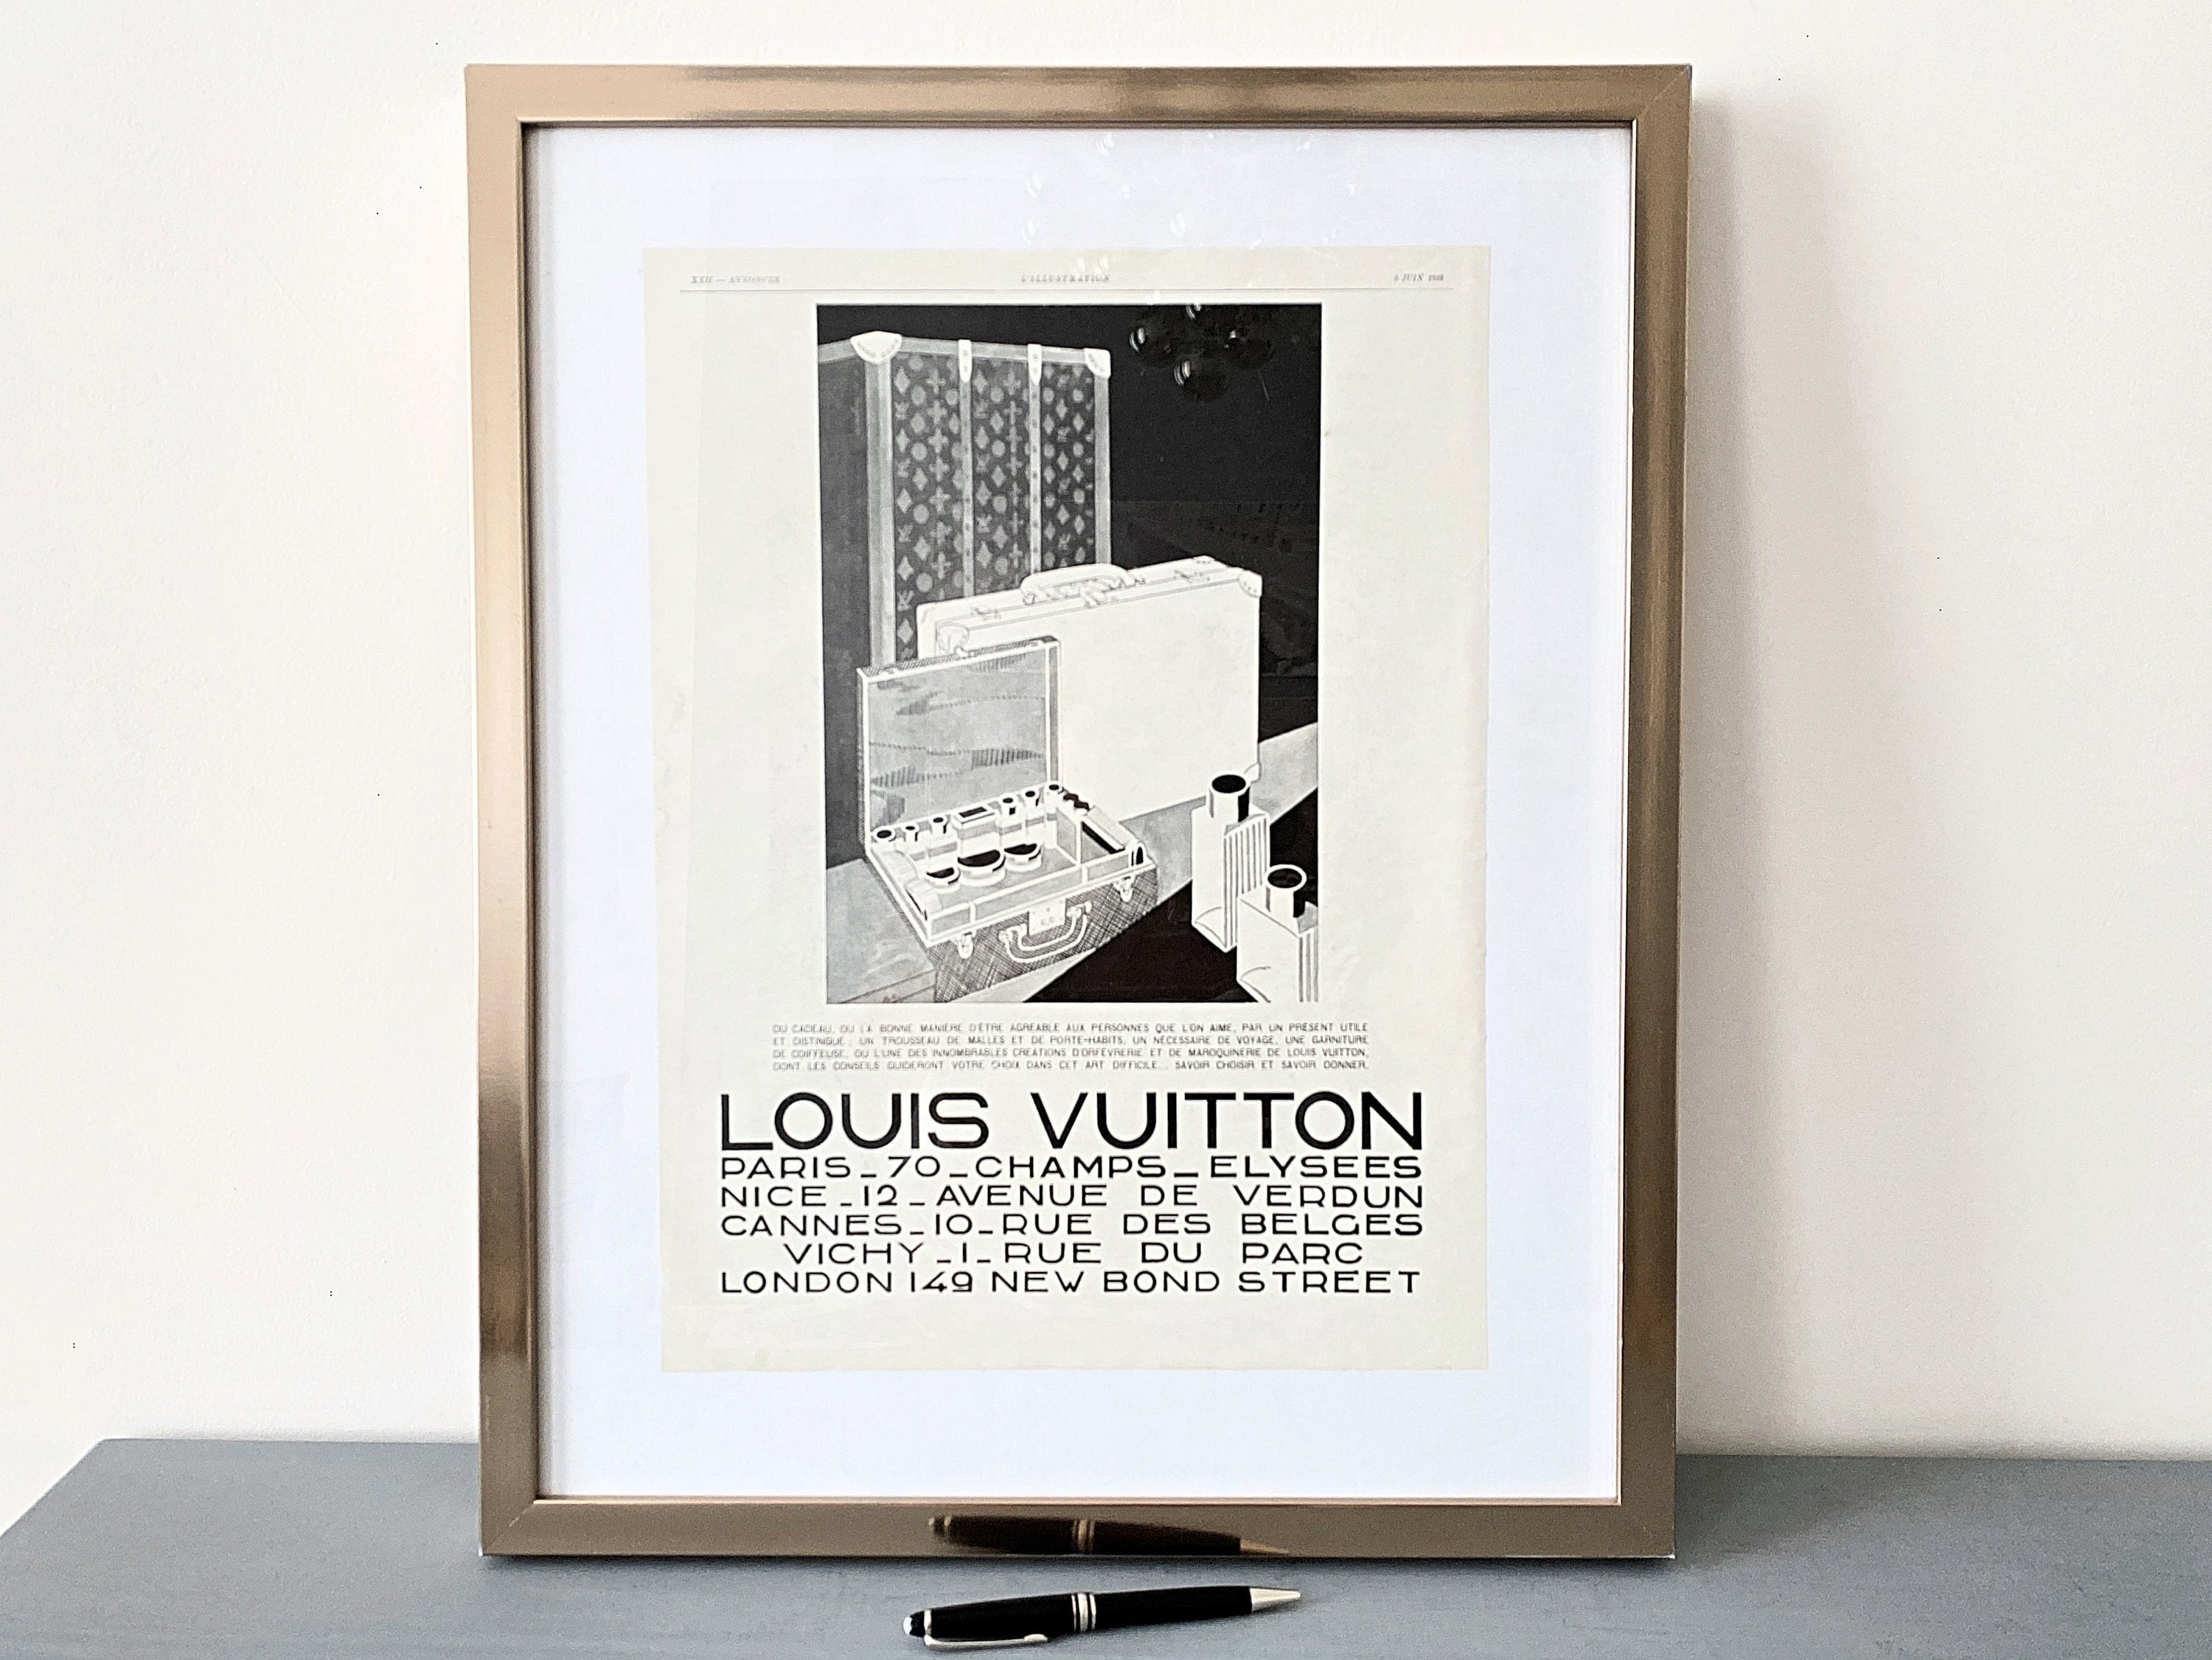 Louis Vuitton Logo Pattern V4 Wall Decal Home Decor Bedroom Room Vinyl  Sticker Art Quote Designer Brand Luxury Girls Cute Expensive LV